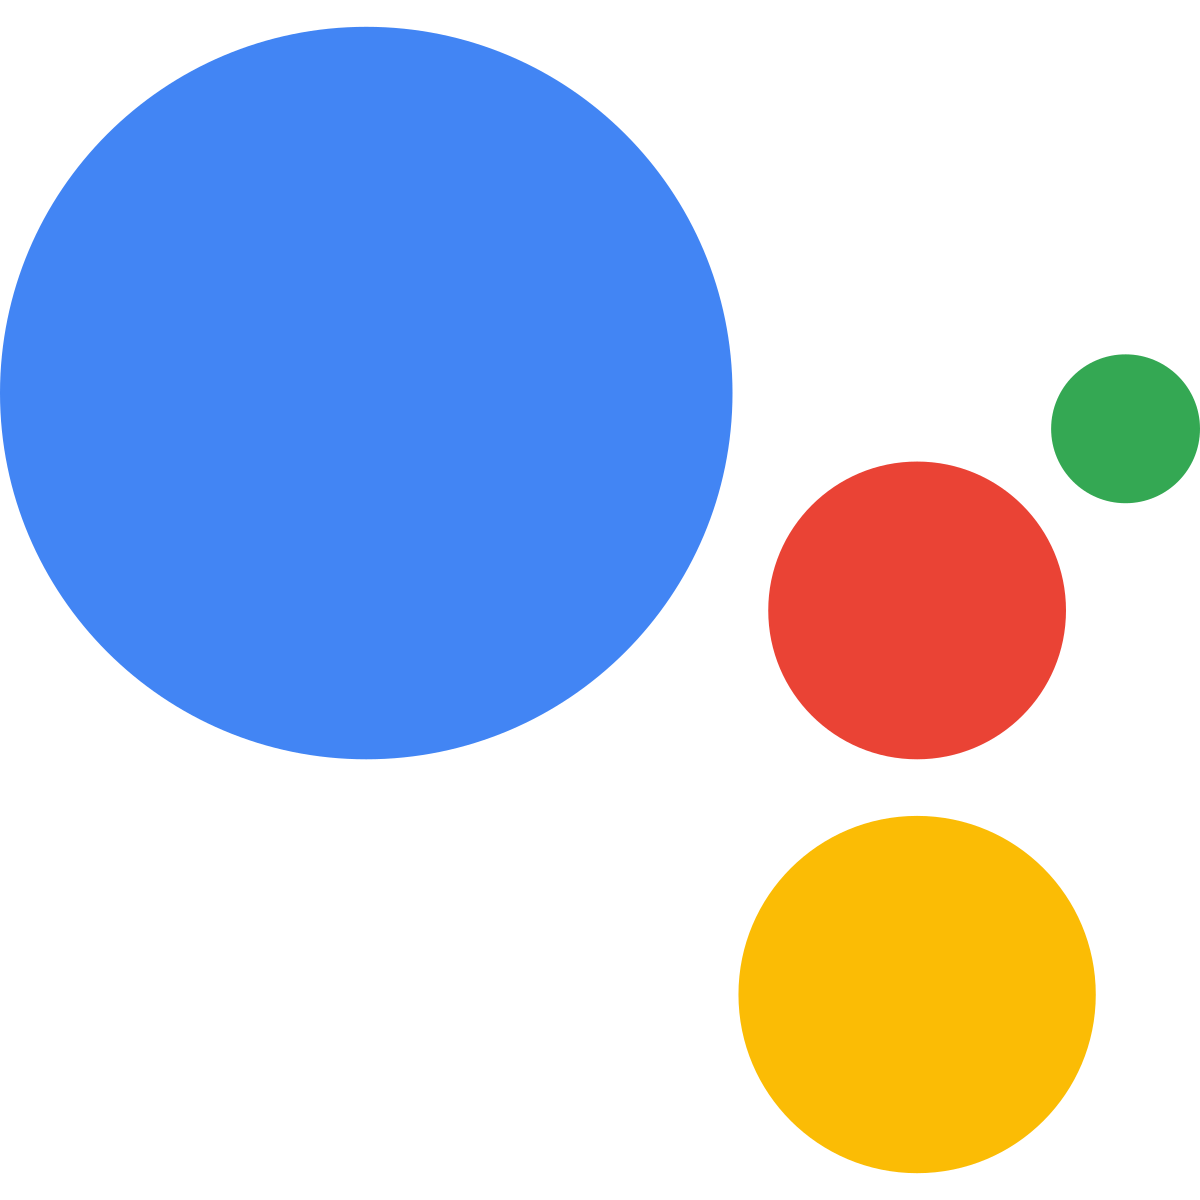 Assistant Logo - Google Assistant